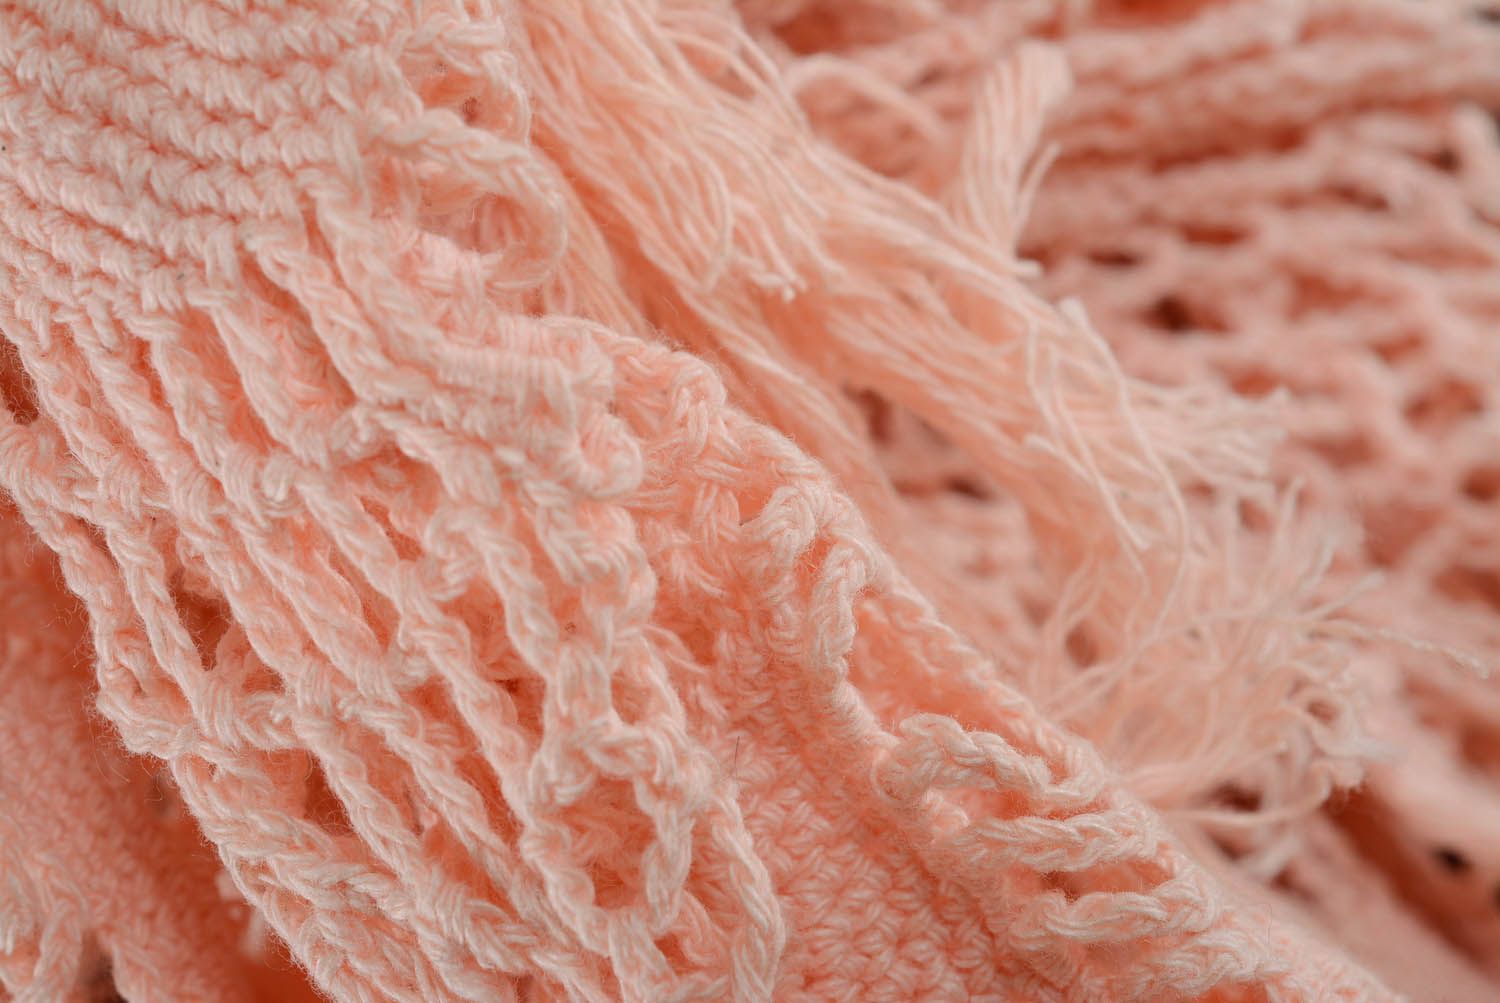 Crochet shawl photo 4